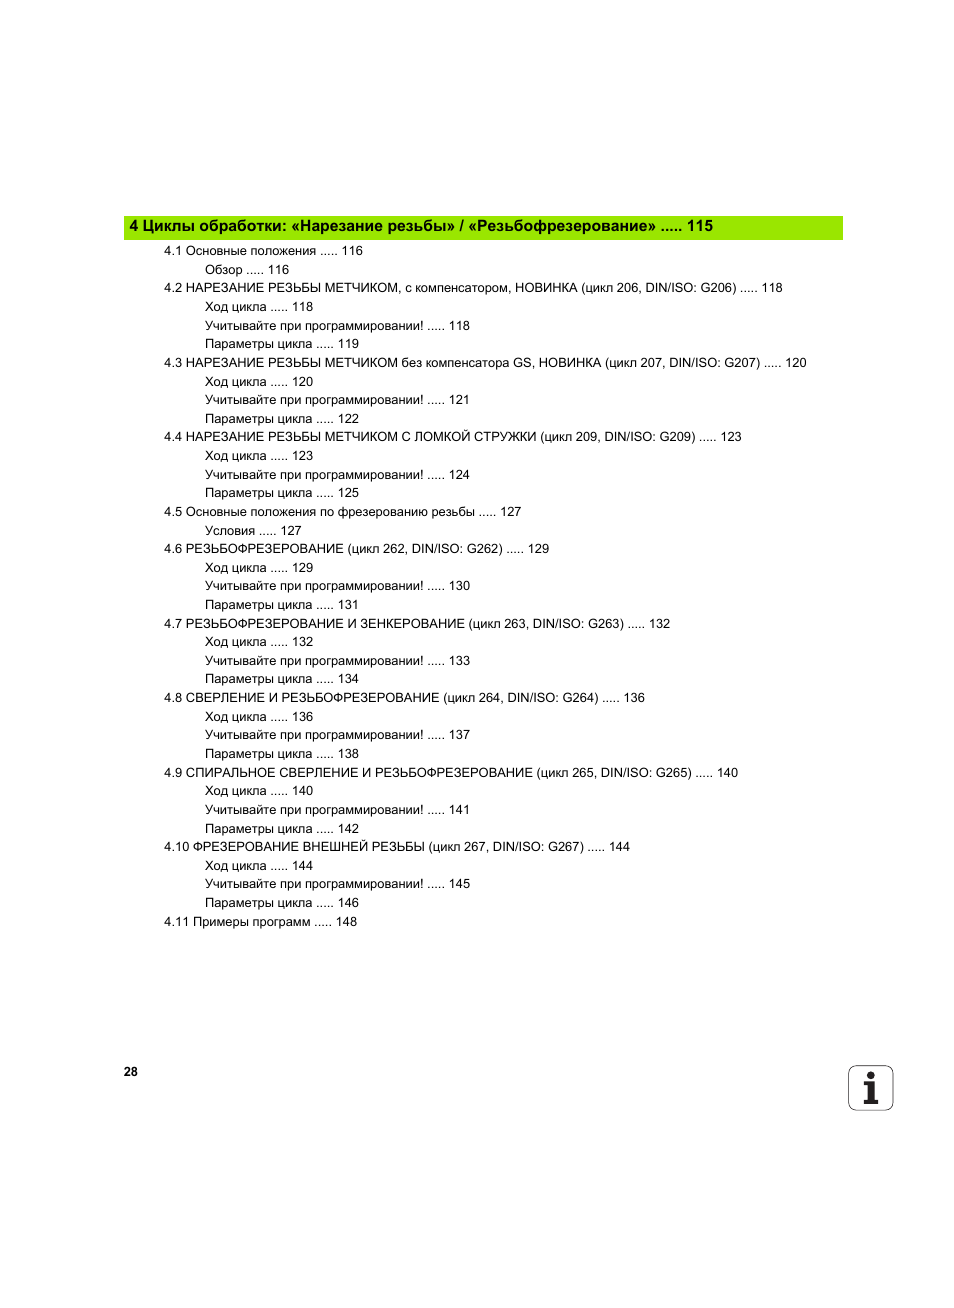 Инструкция по эксплуатации HEIDENHAIN iTNC 530 (34049x-08) Cycle programming | Страница 28 / 539